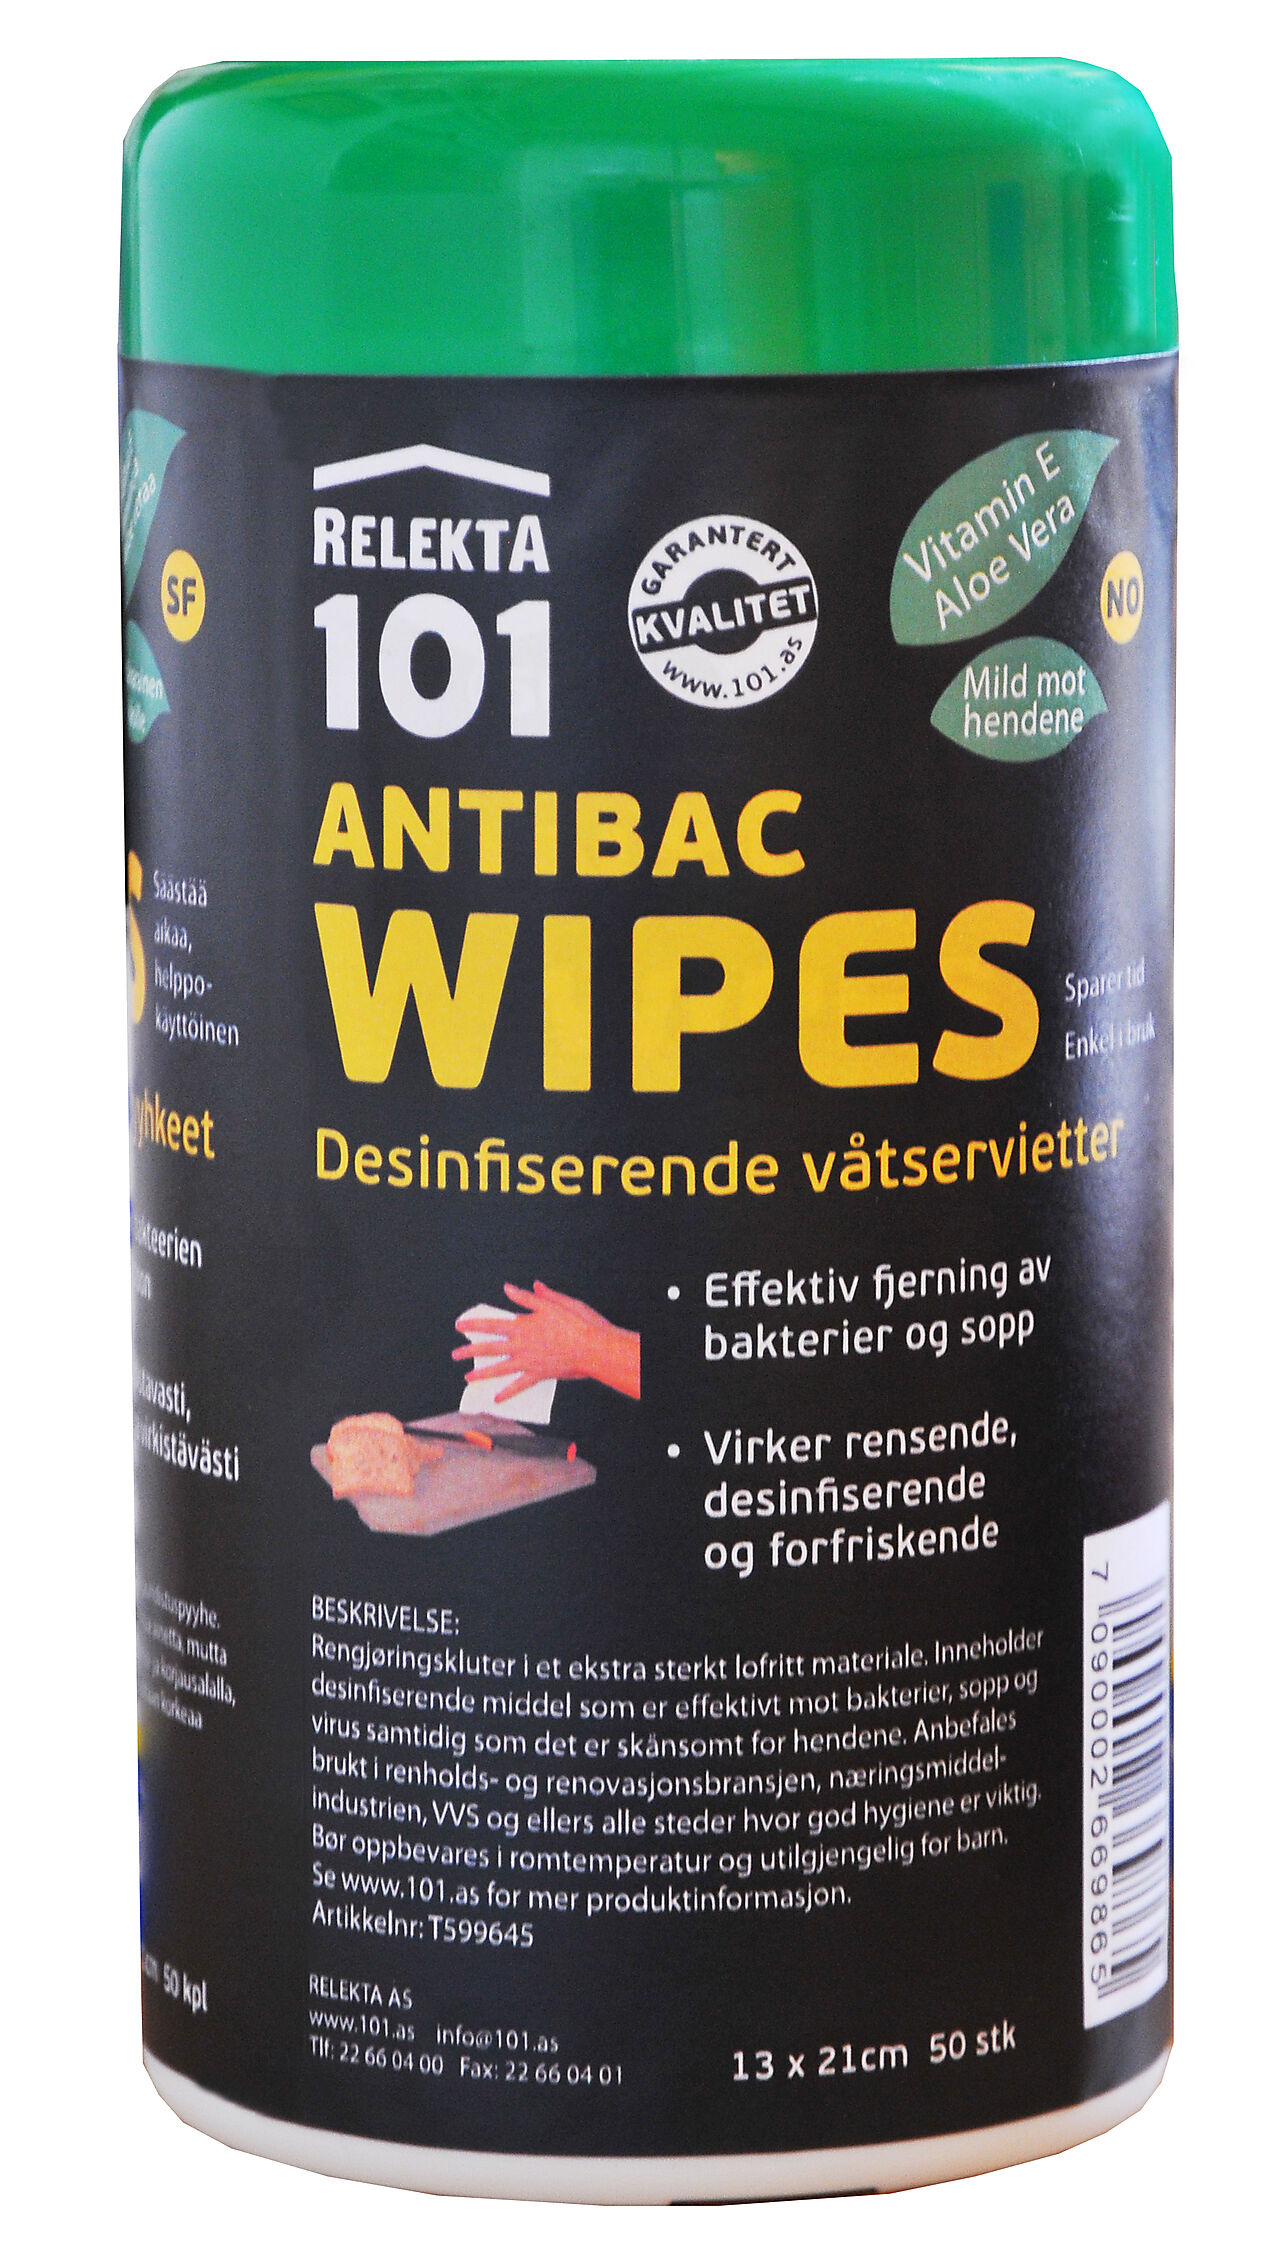 Relekta Våtserviett antibac wipes 50 kluter m/ Aloe vera 1